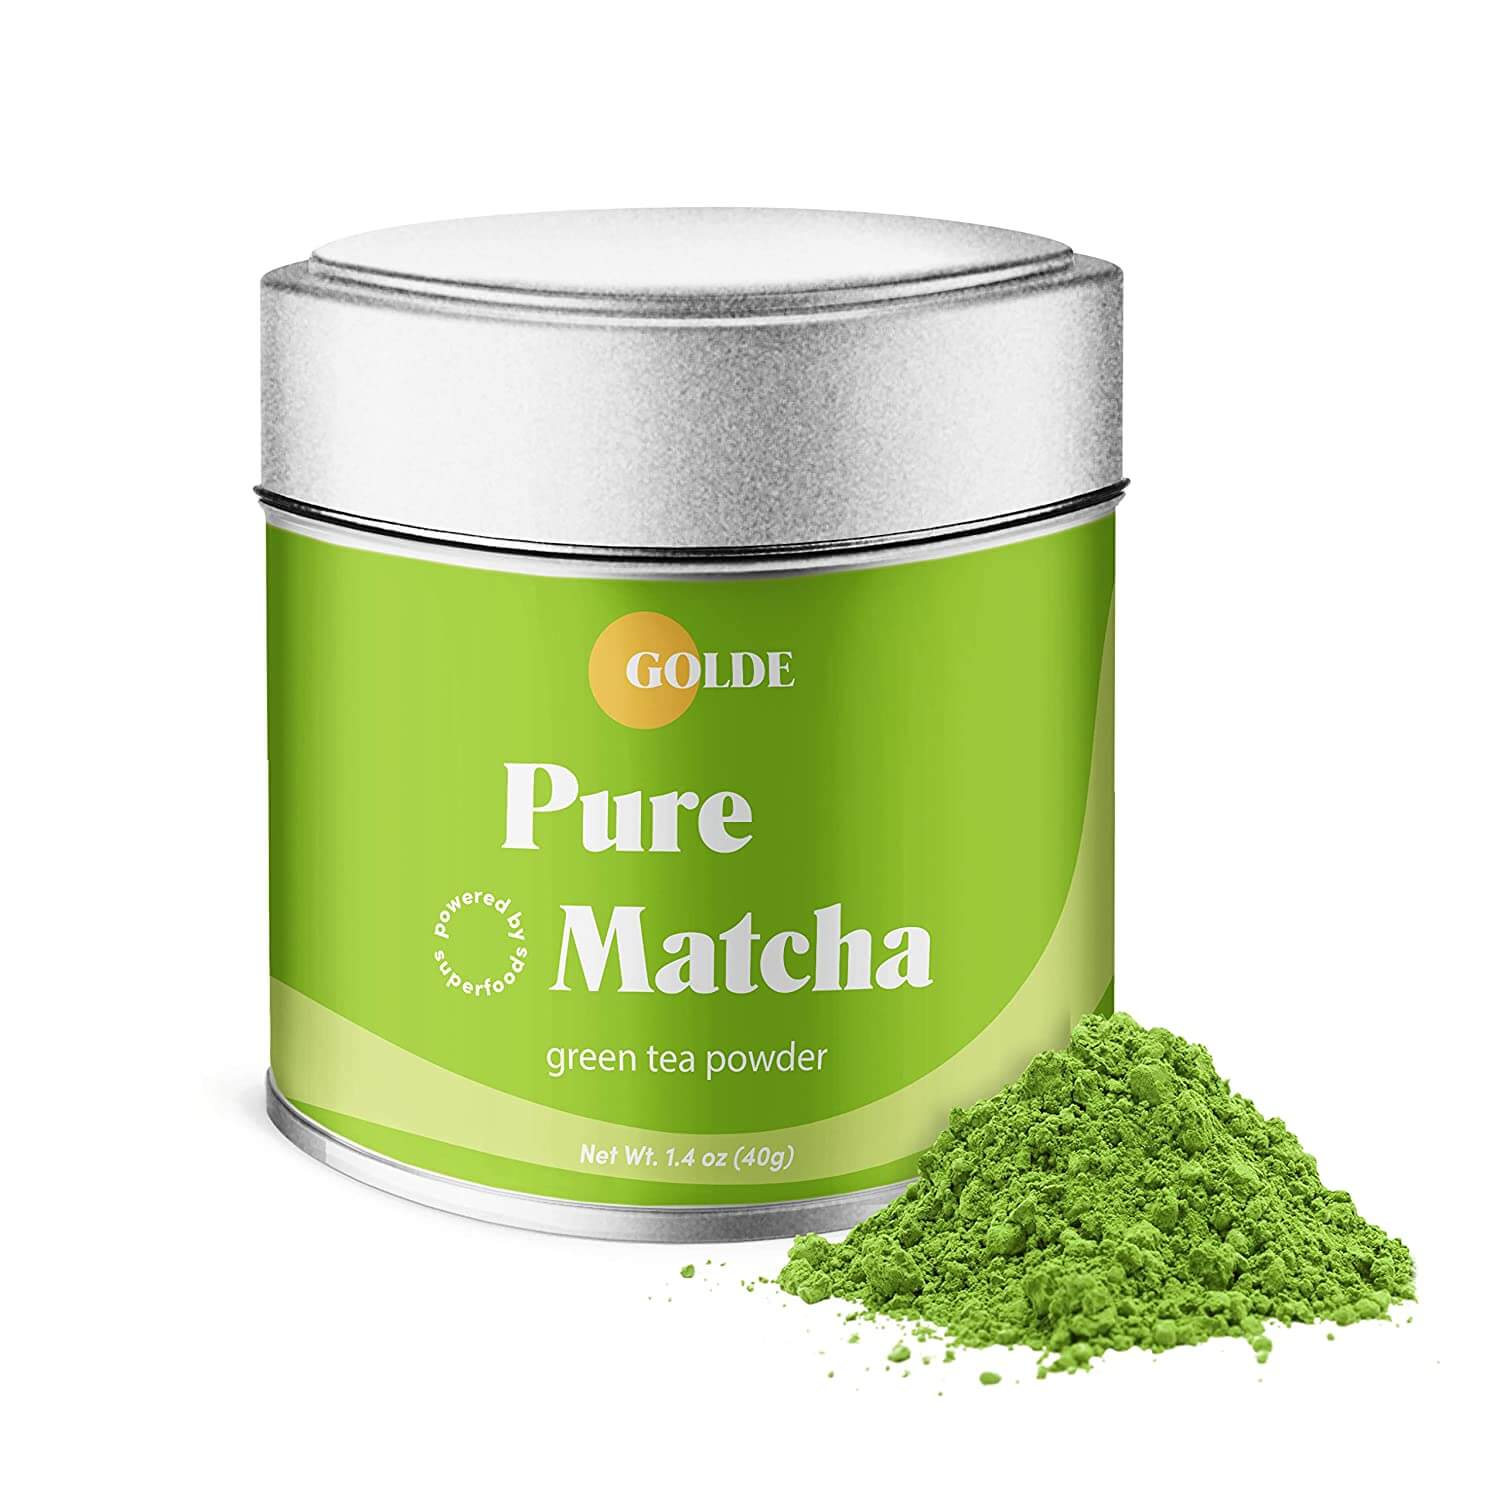 Golde Pure Matcha | Ceremonial Grade Matcha Green Tea Powder | Superfood (40g Tin)